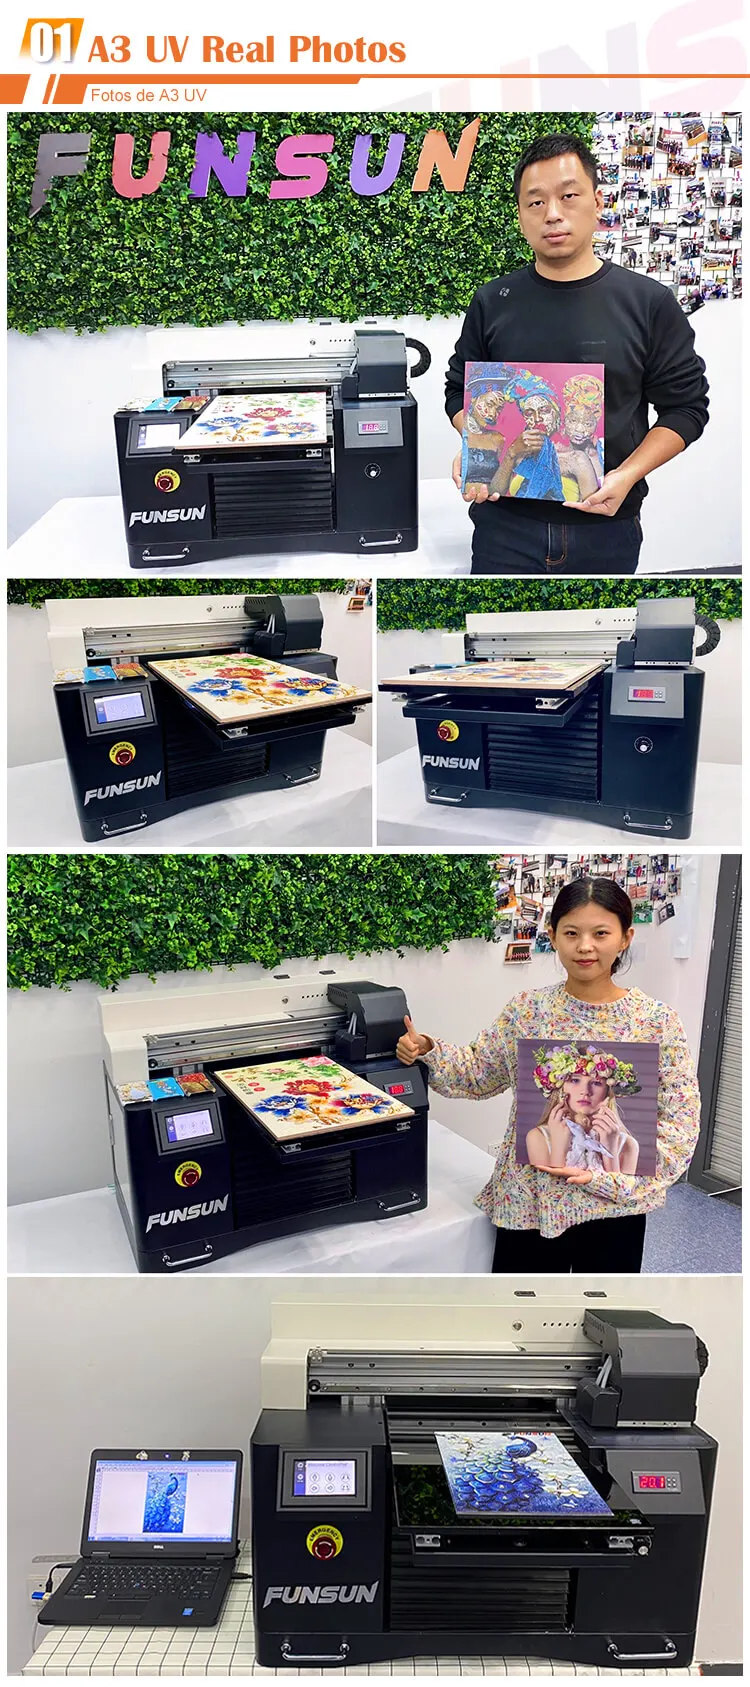 Funsun Digital Printing Machine for A3 UV Machine Printing UV Printer with Factory Price